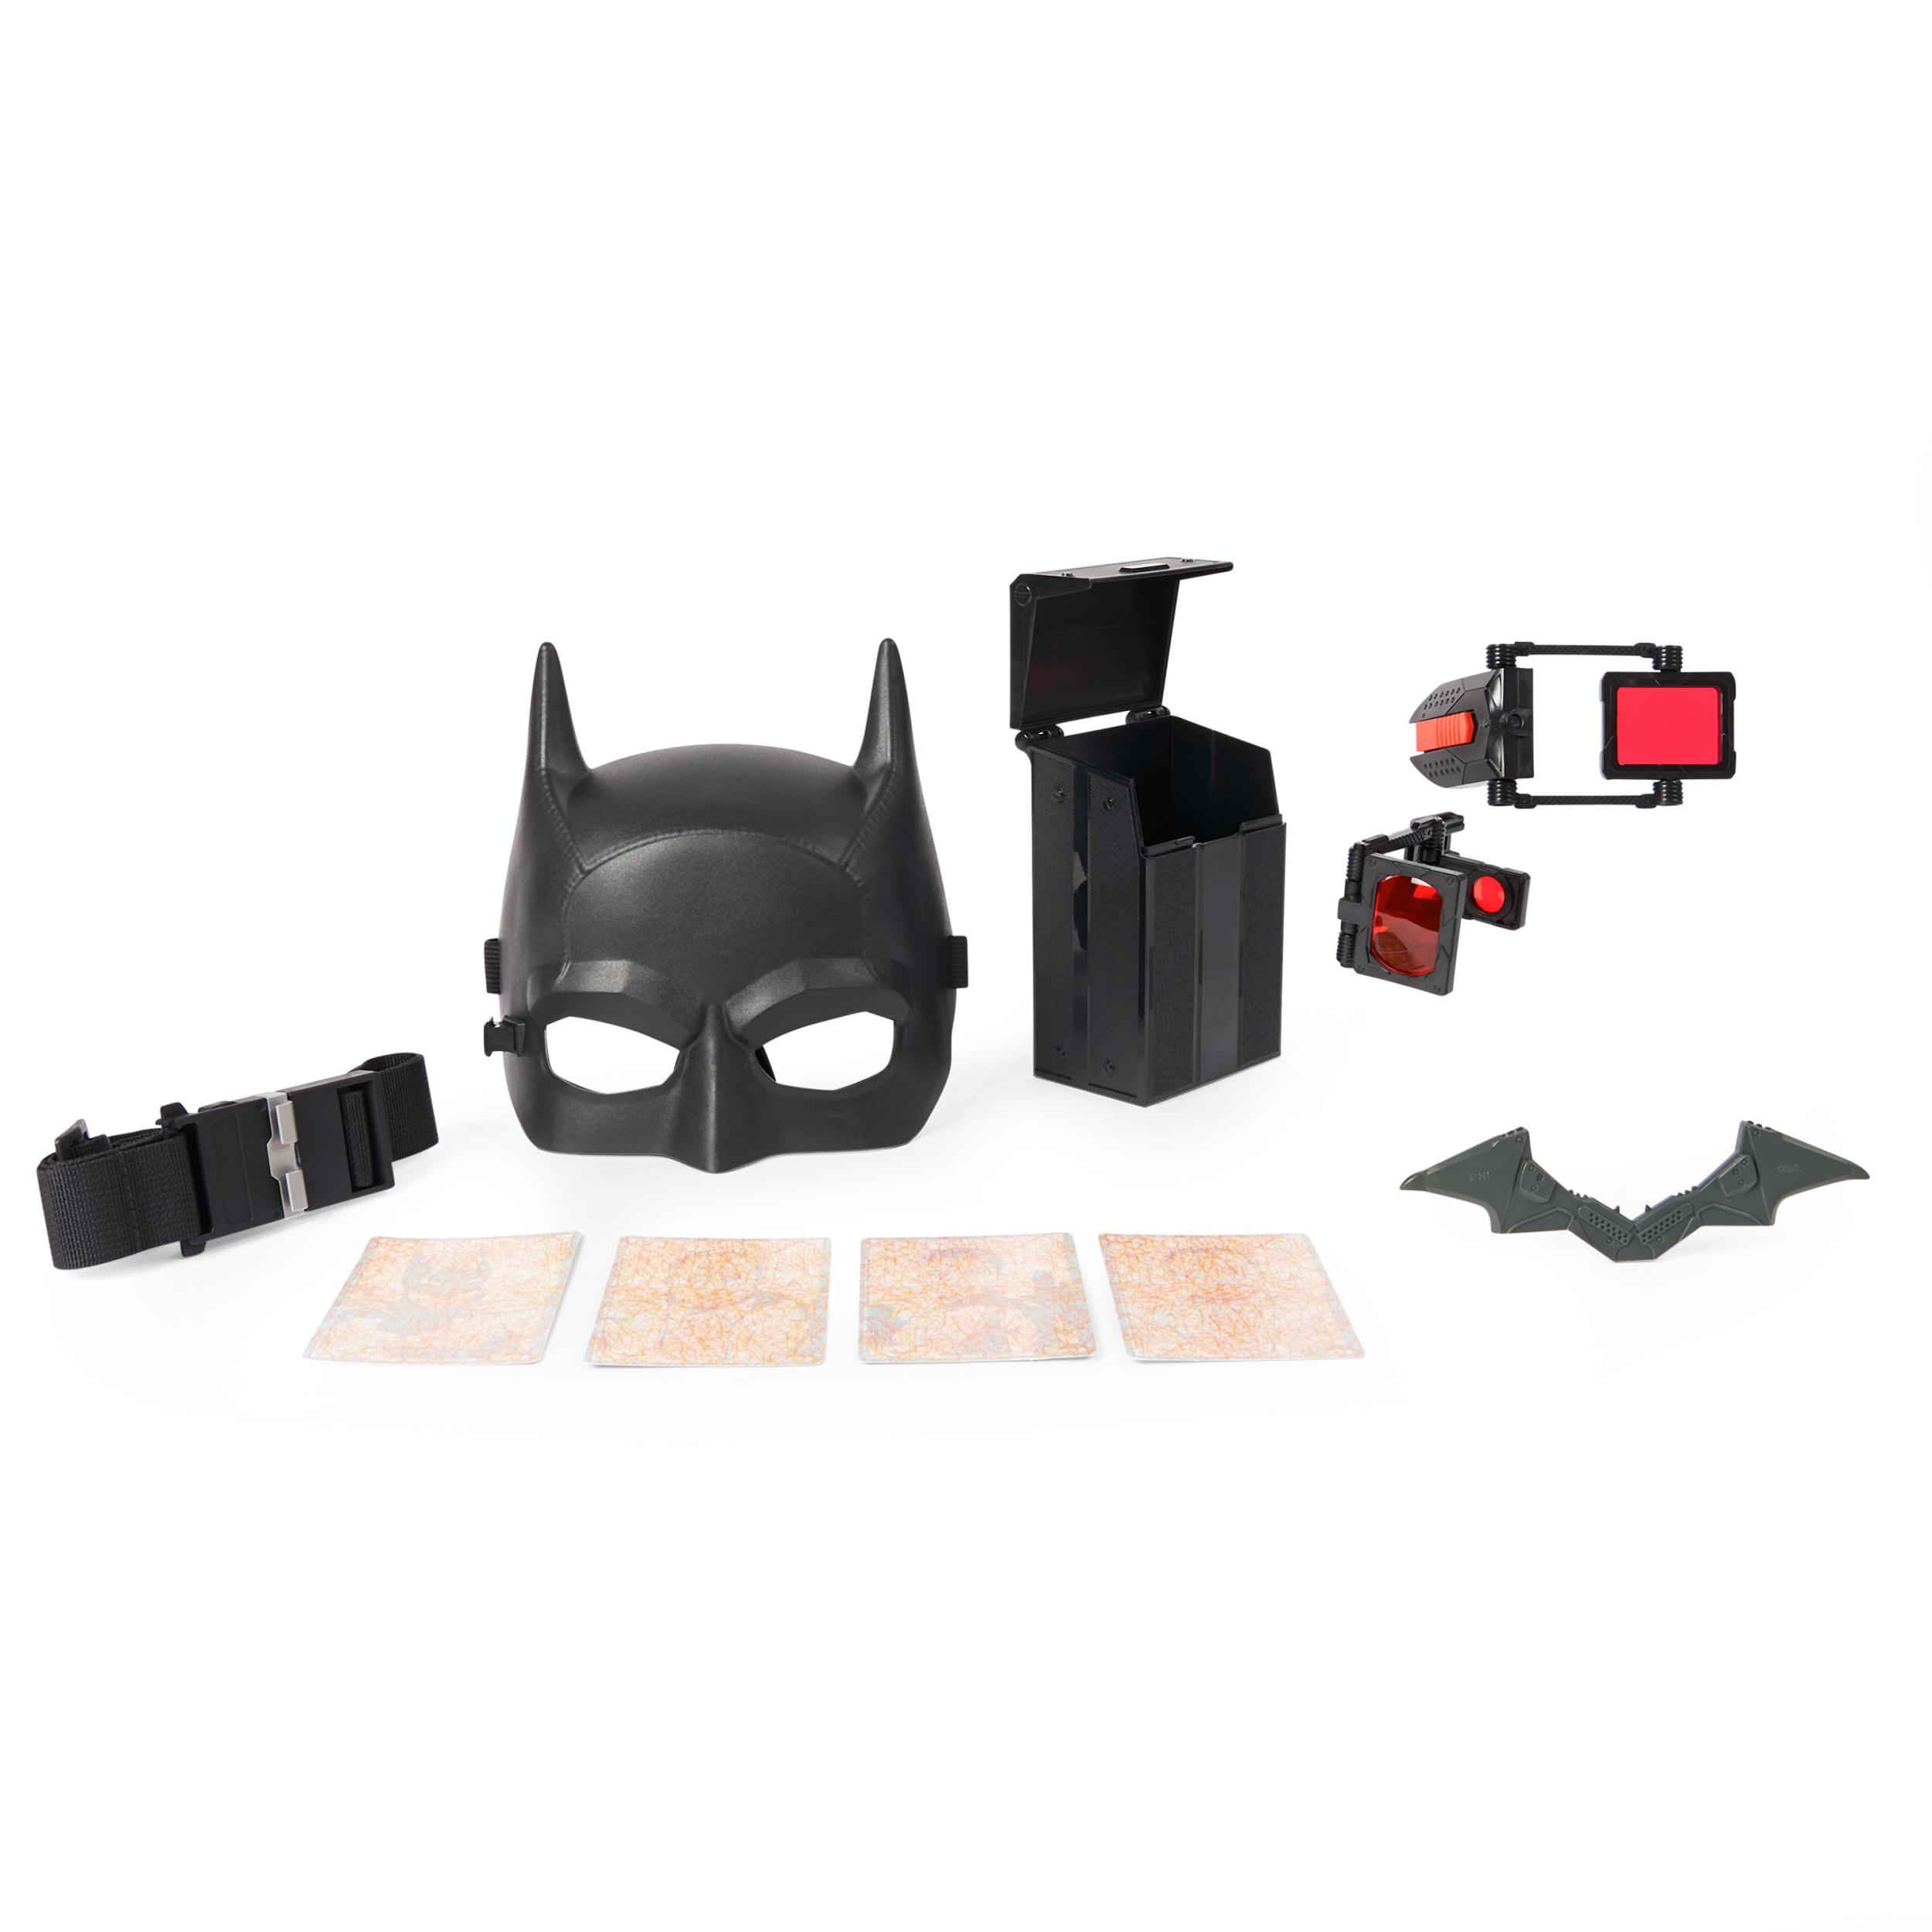 The batman detective kit img 2